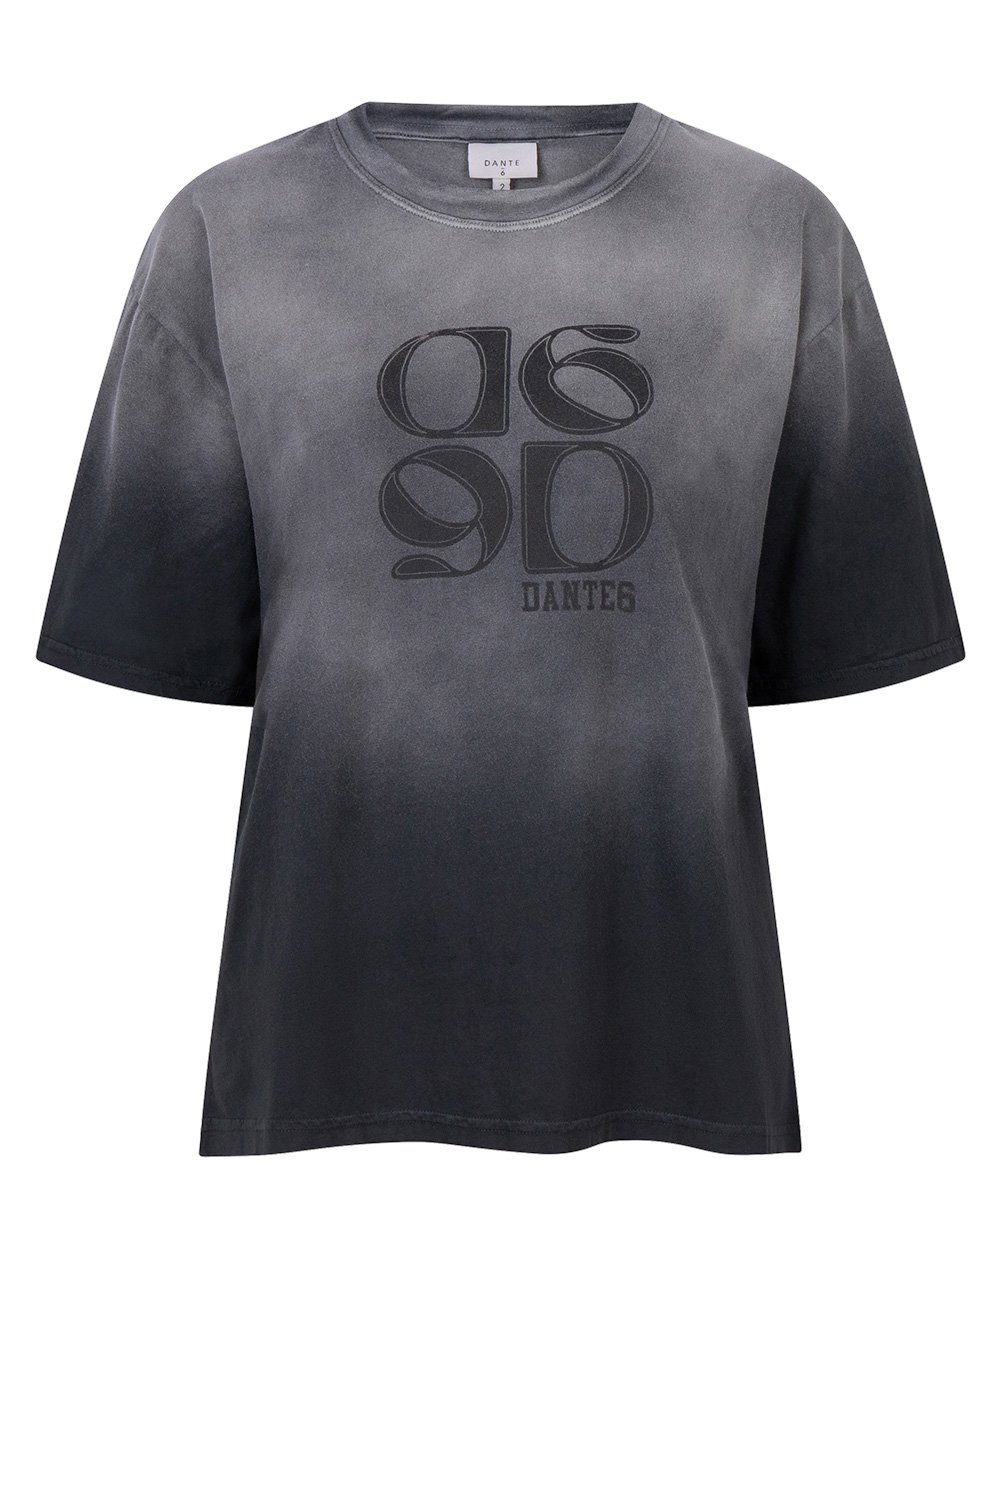 Dante 6 Verwassen t-shirt met logo Asthon zwart